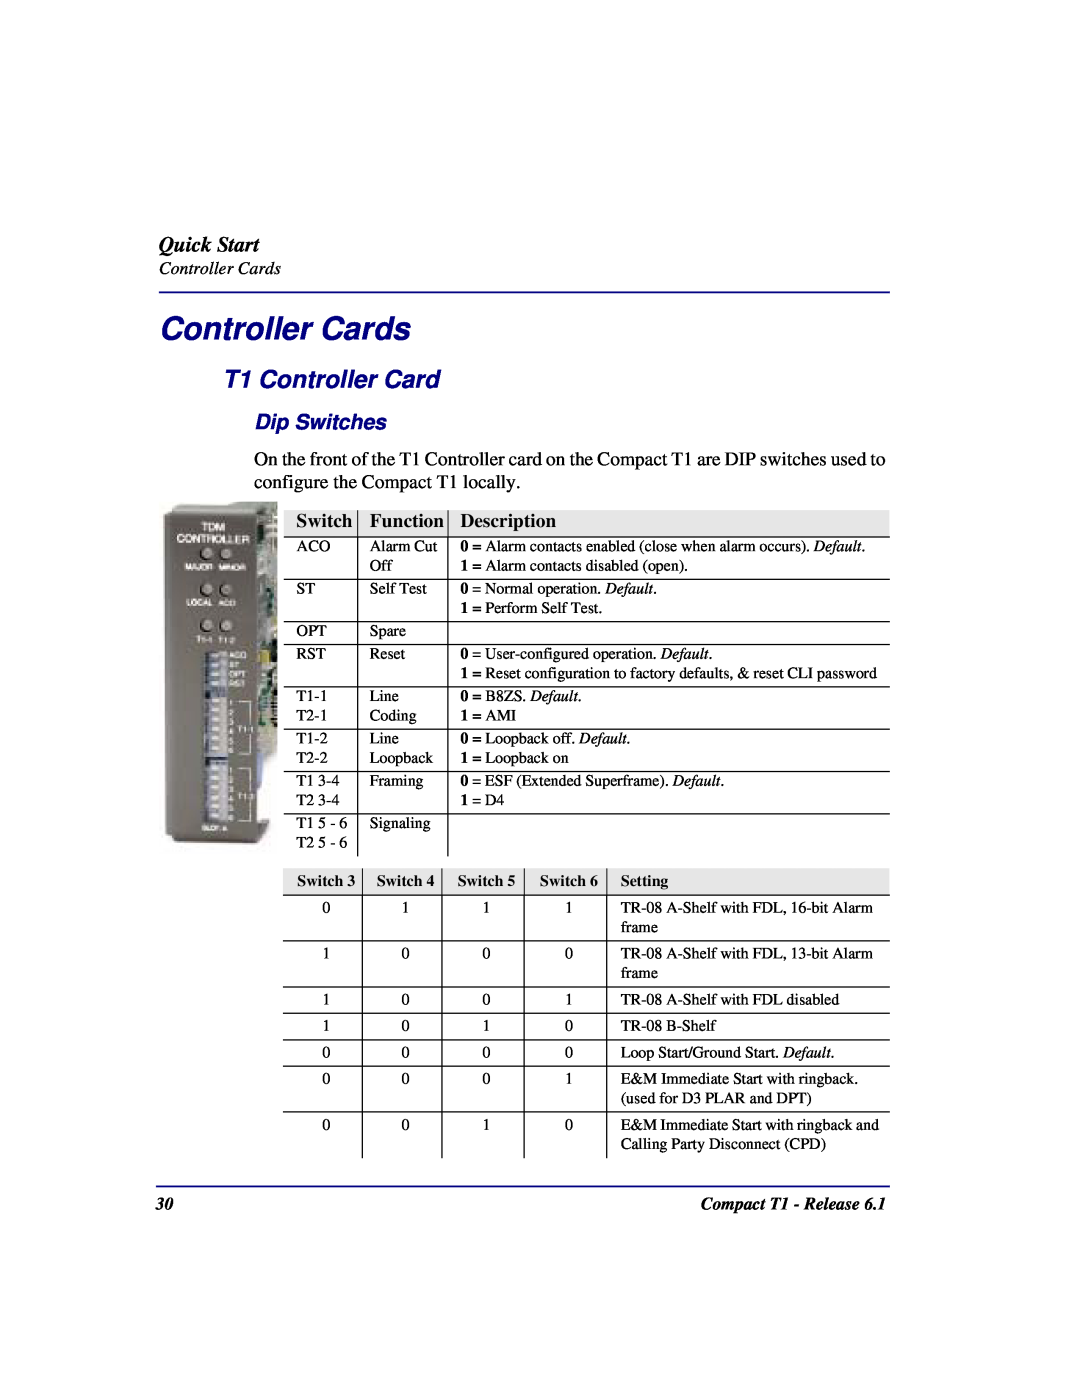 Black Box COMPACT T1 quick start Controller Cards, T1 Controller Card, Quick Start, Compact T1 - Release 